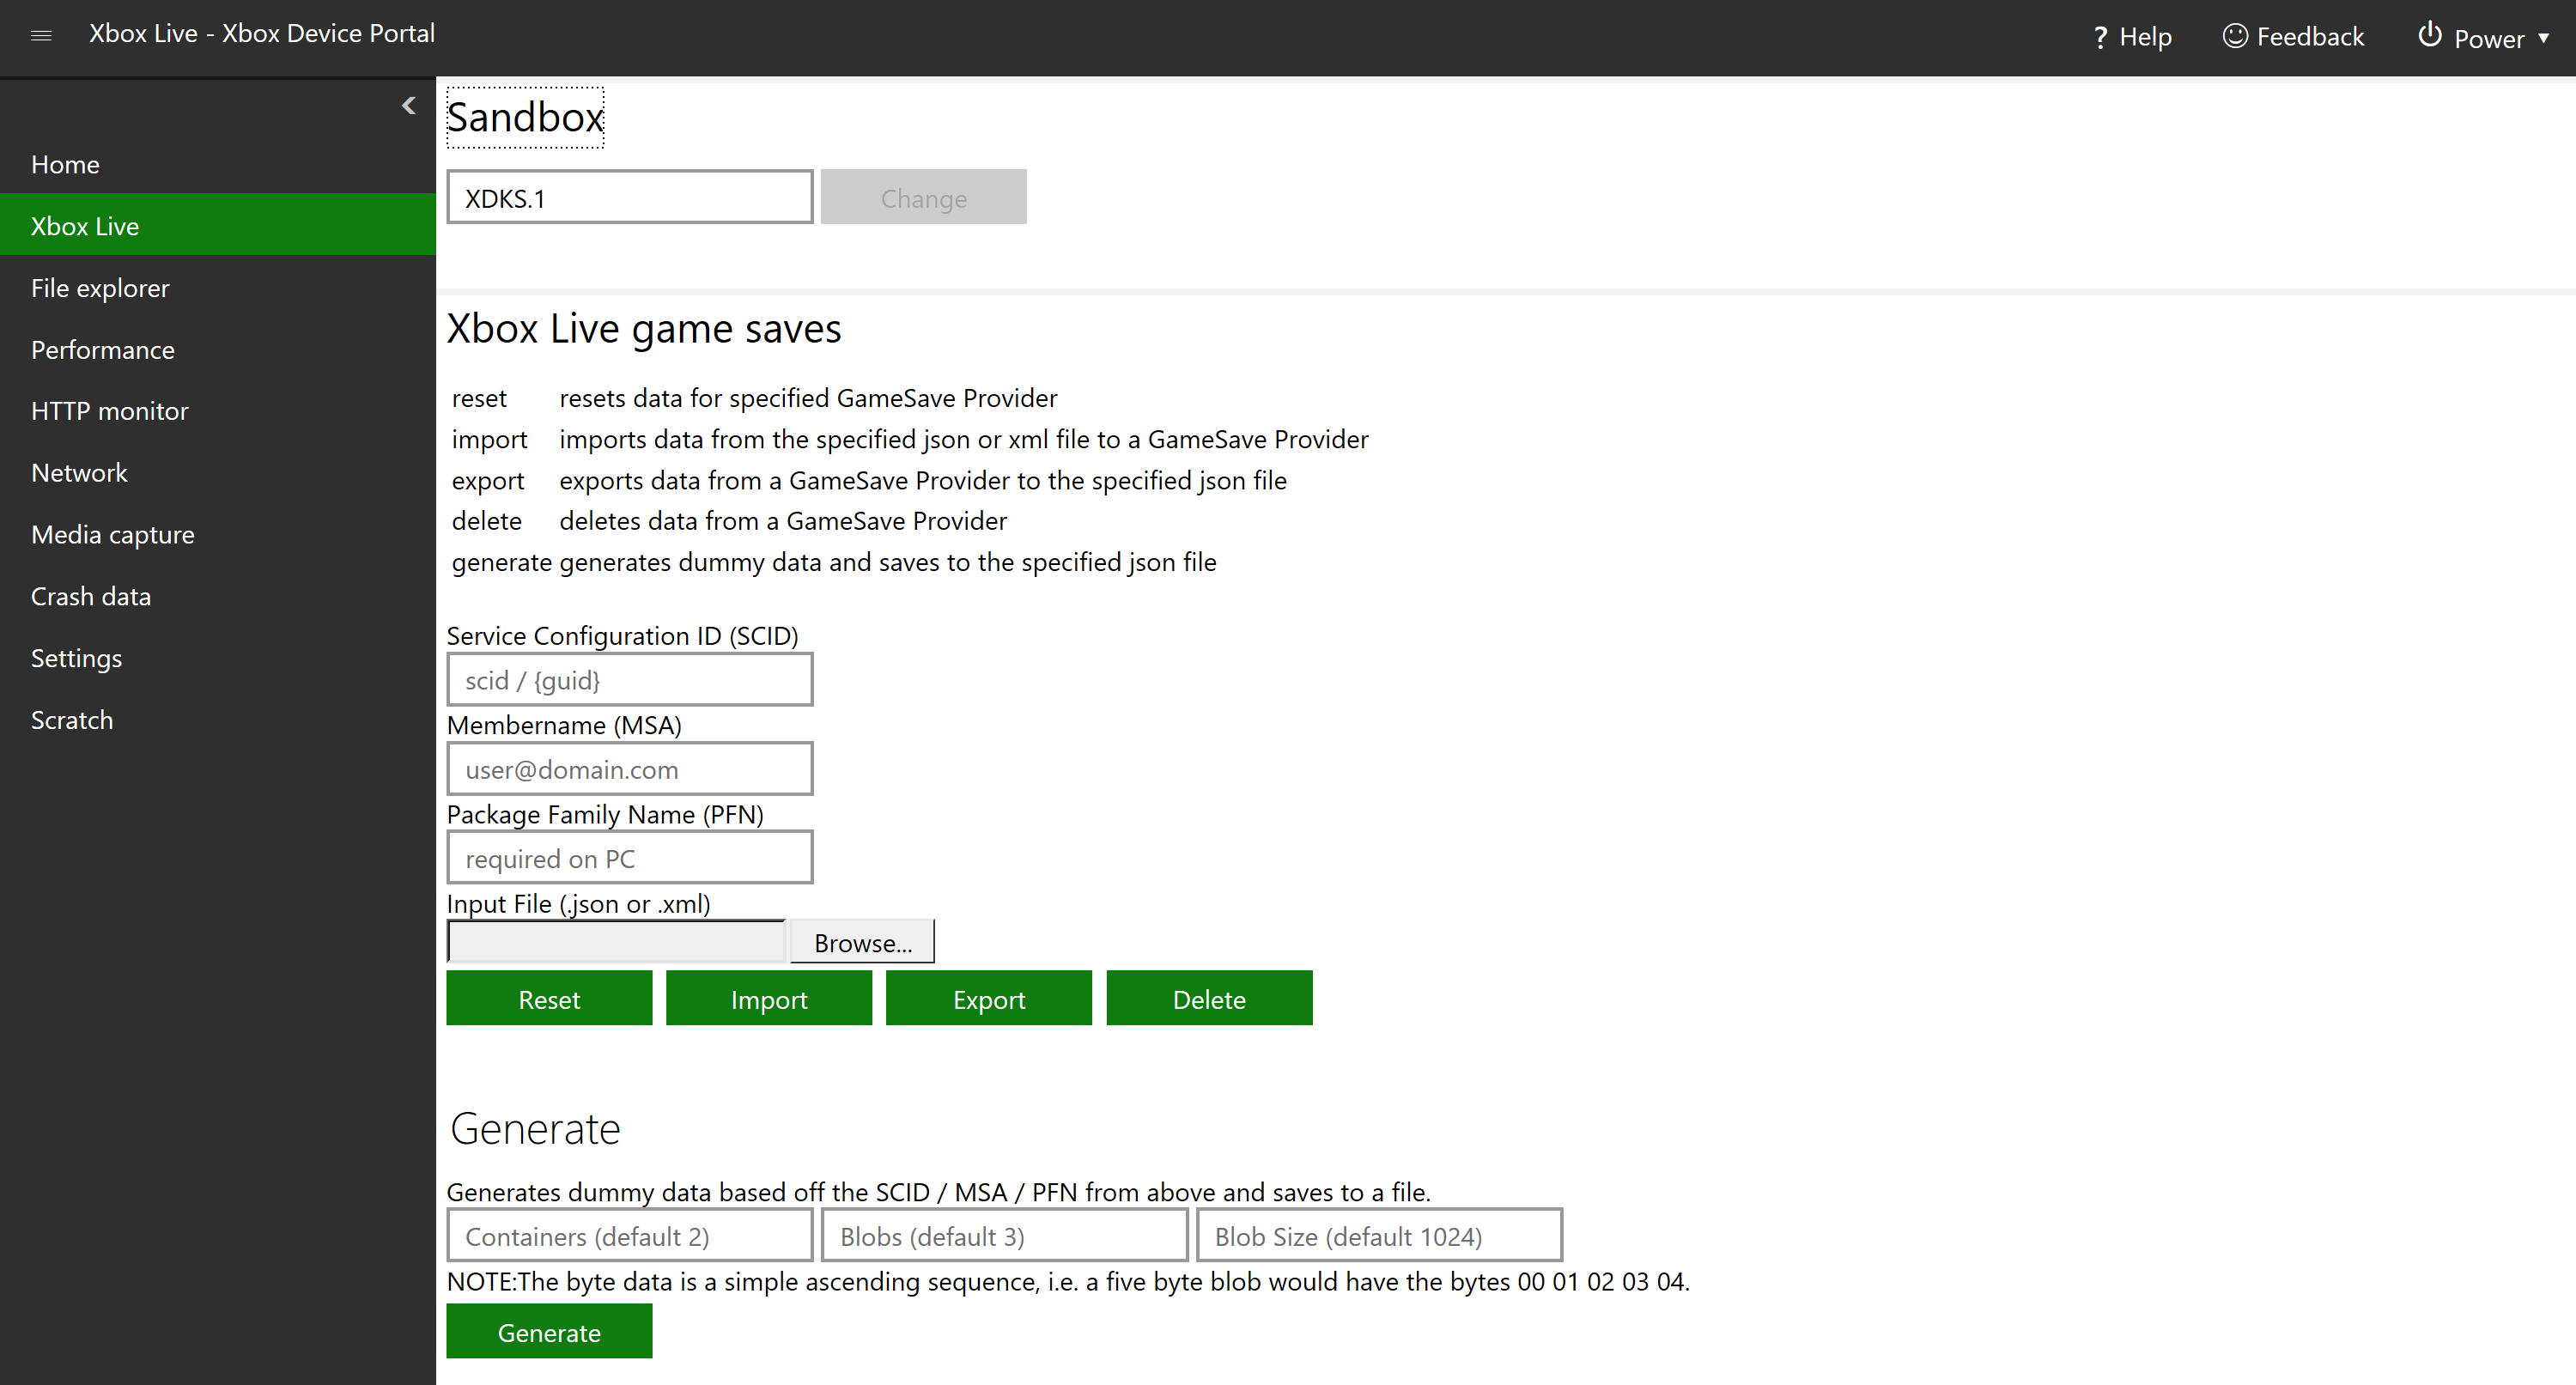 Geräteportal für Xbox - UWP applications | Microsoft Learn